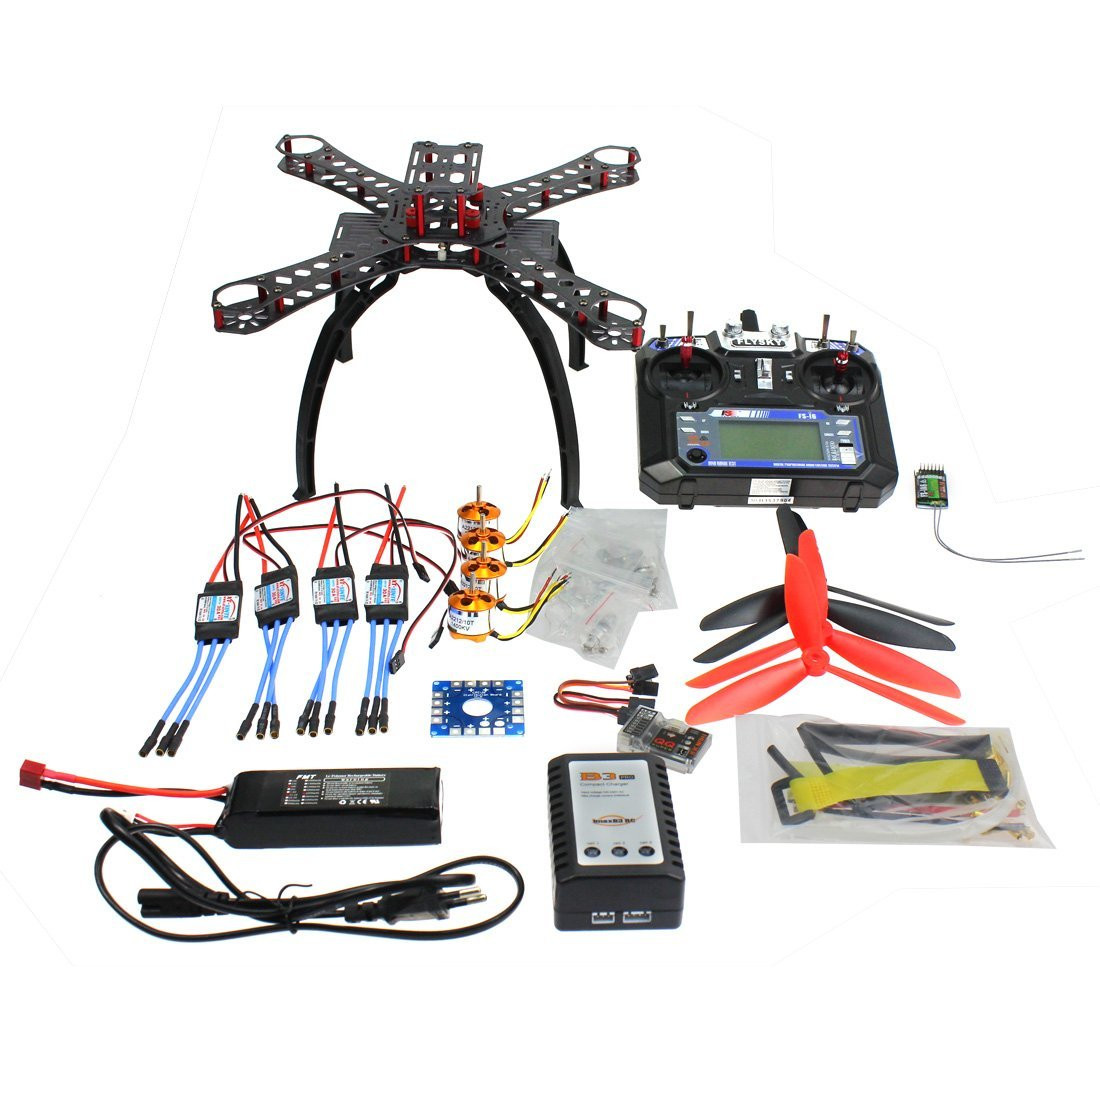 DIY Racing Drone Kit
 The Best Educational DIY Drone Kits in 2017